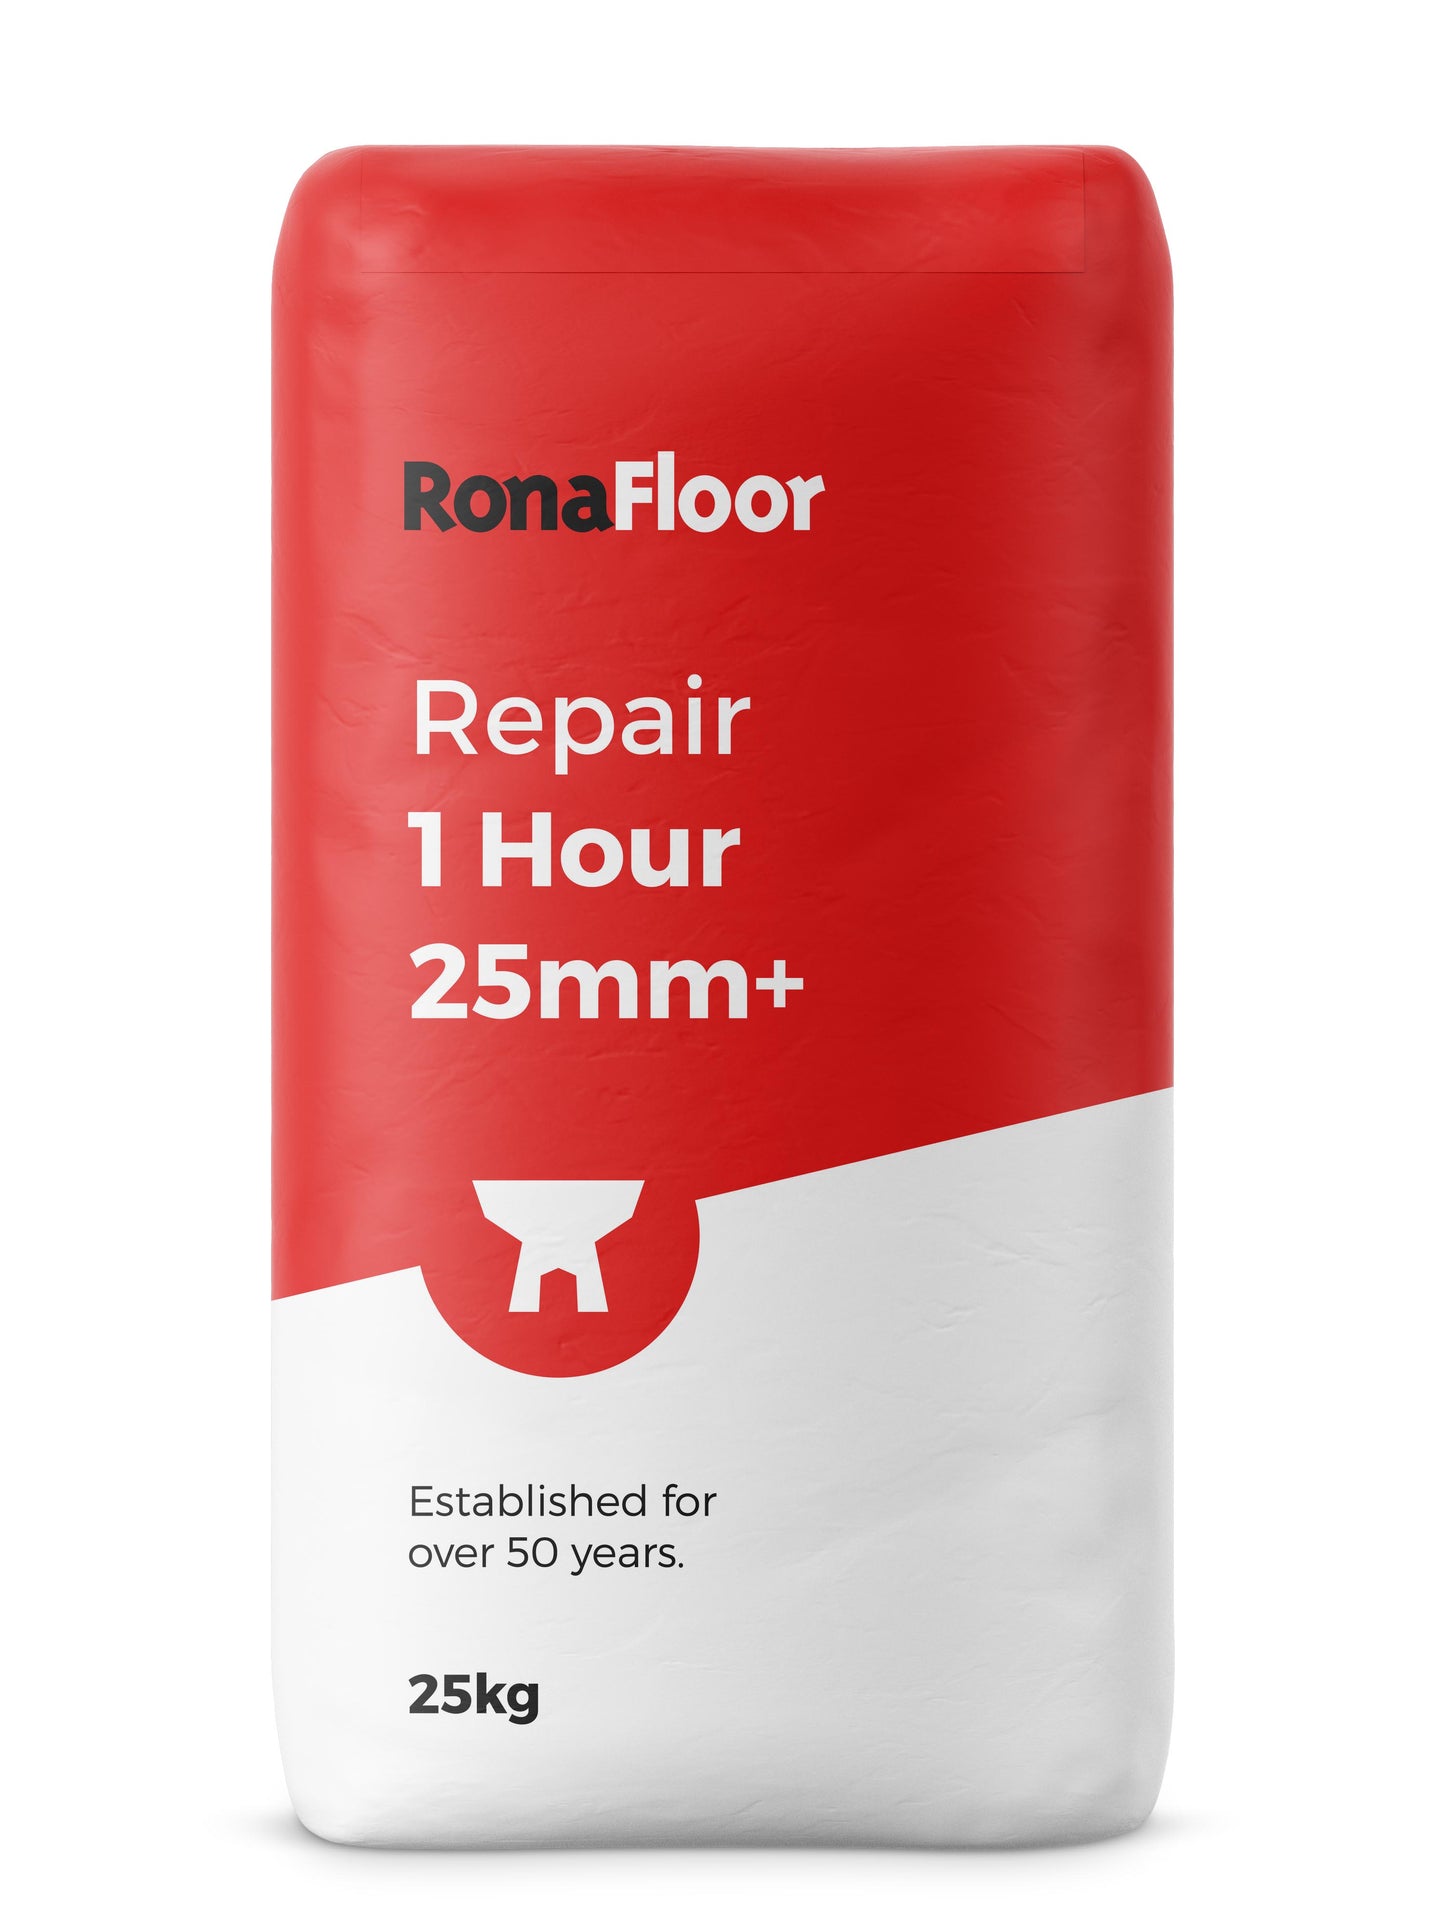 RonaFloor Repair 1 Hour 25mm+